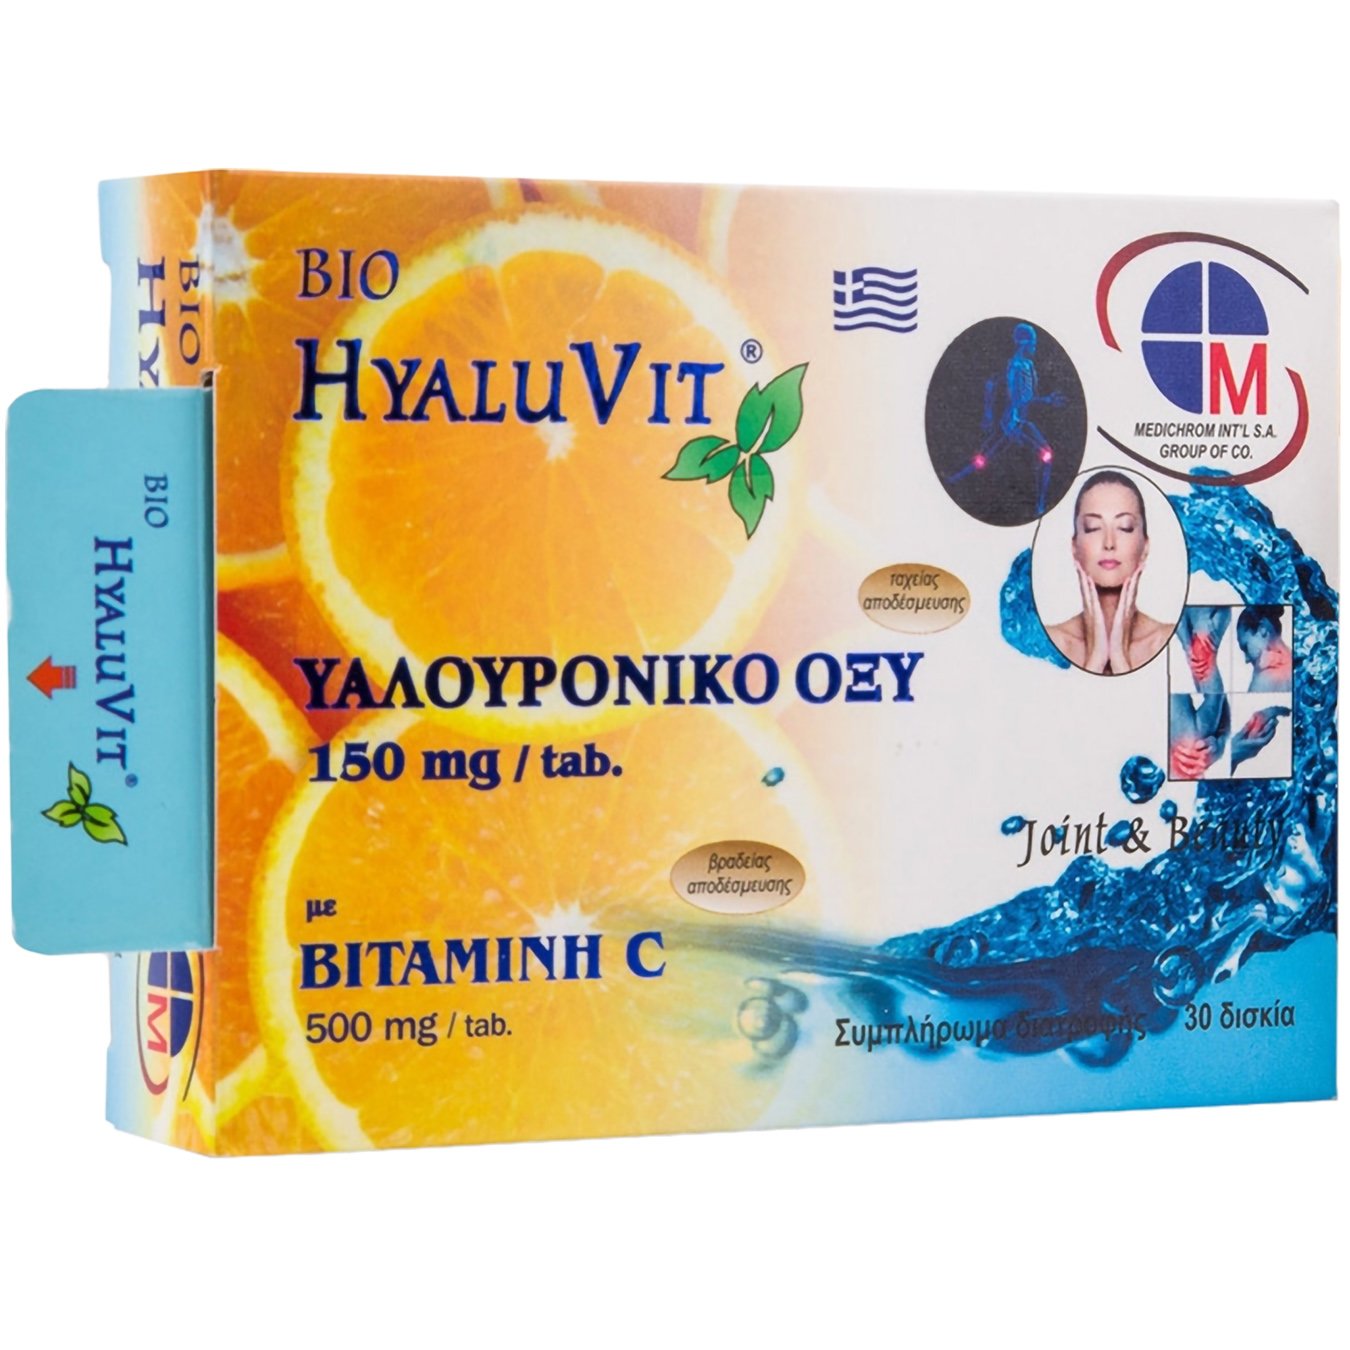 Medichrom Hyaluvit Hyaluronic Acid 150mg & Vitamin C 500mg Συμπλήρωμα Διατροφής για την Καλή Υγεία του Δέρματος, των Αρθρώσεων & του Ανοσοποιητικού 30tabs